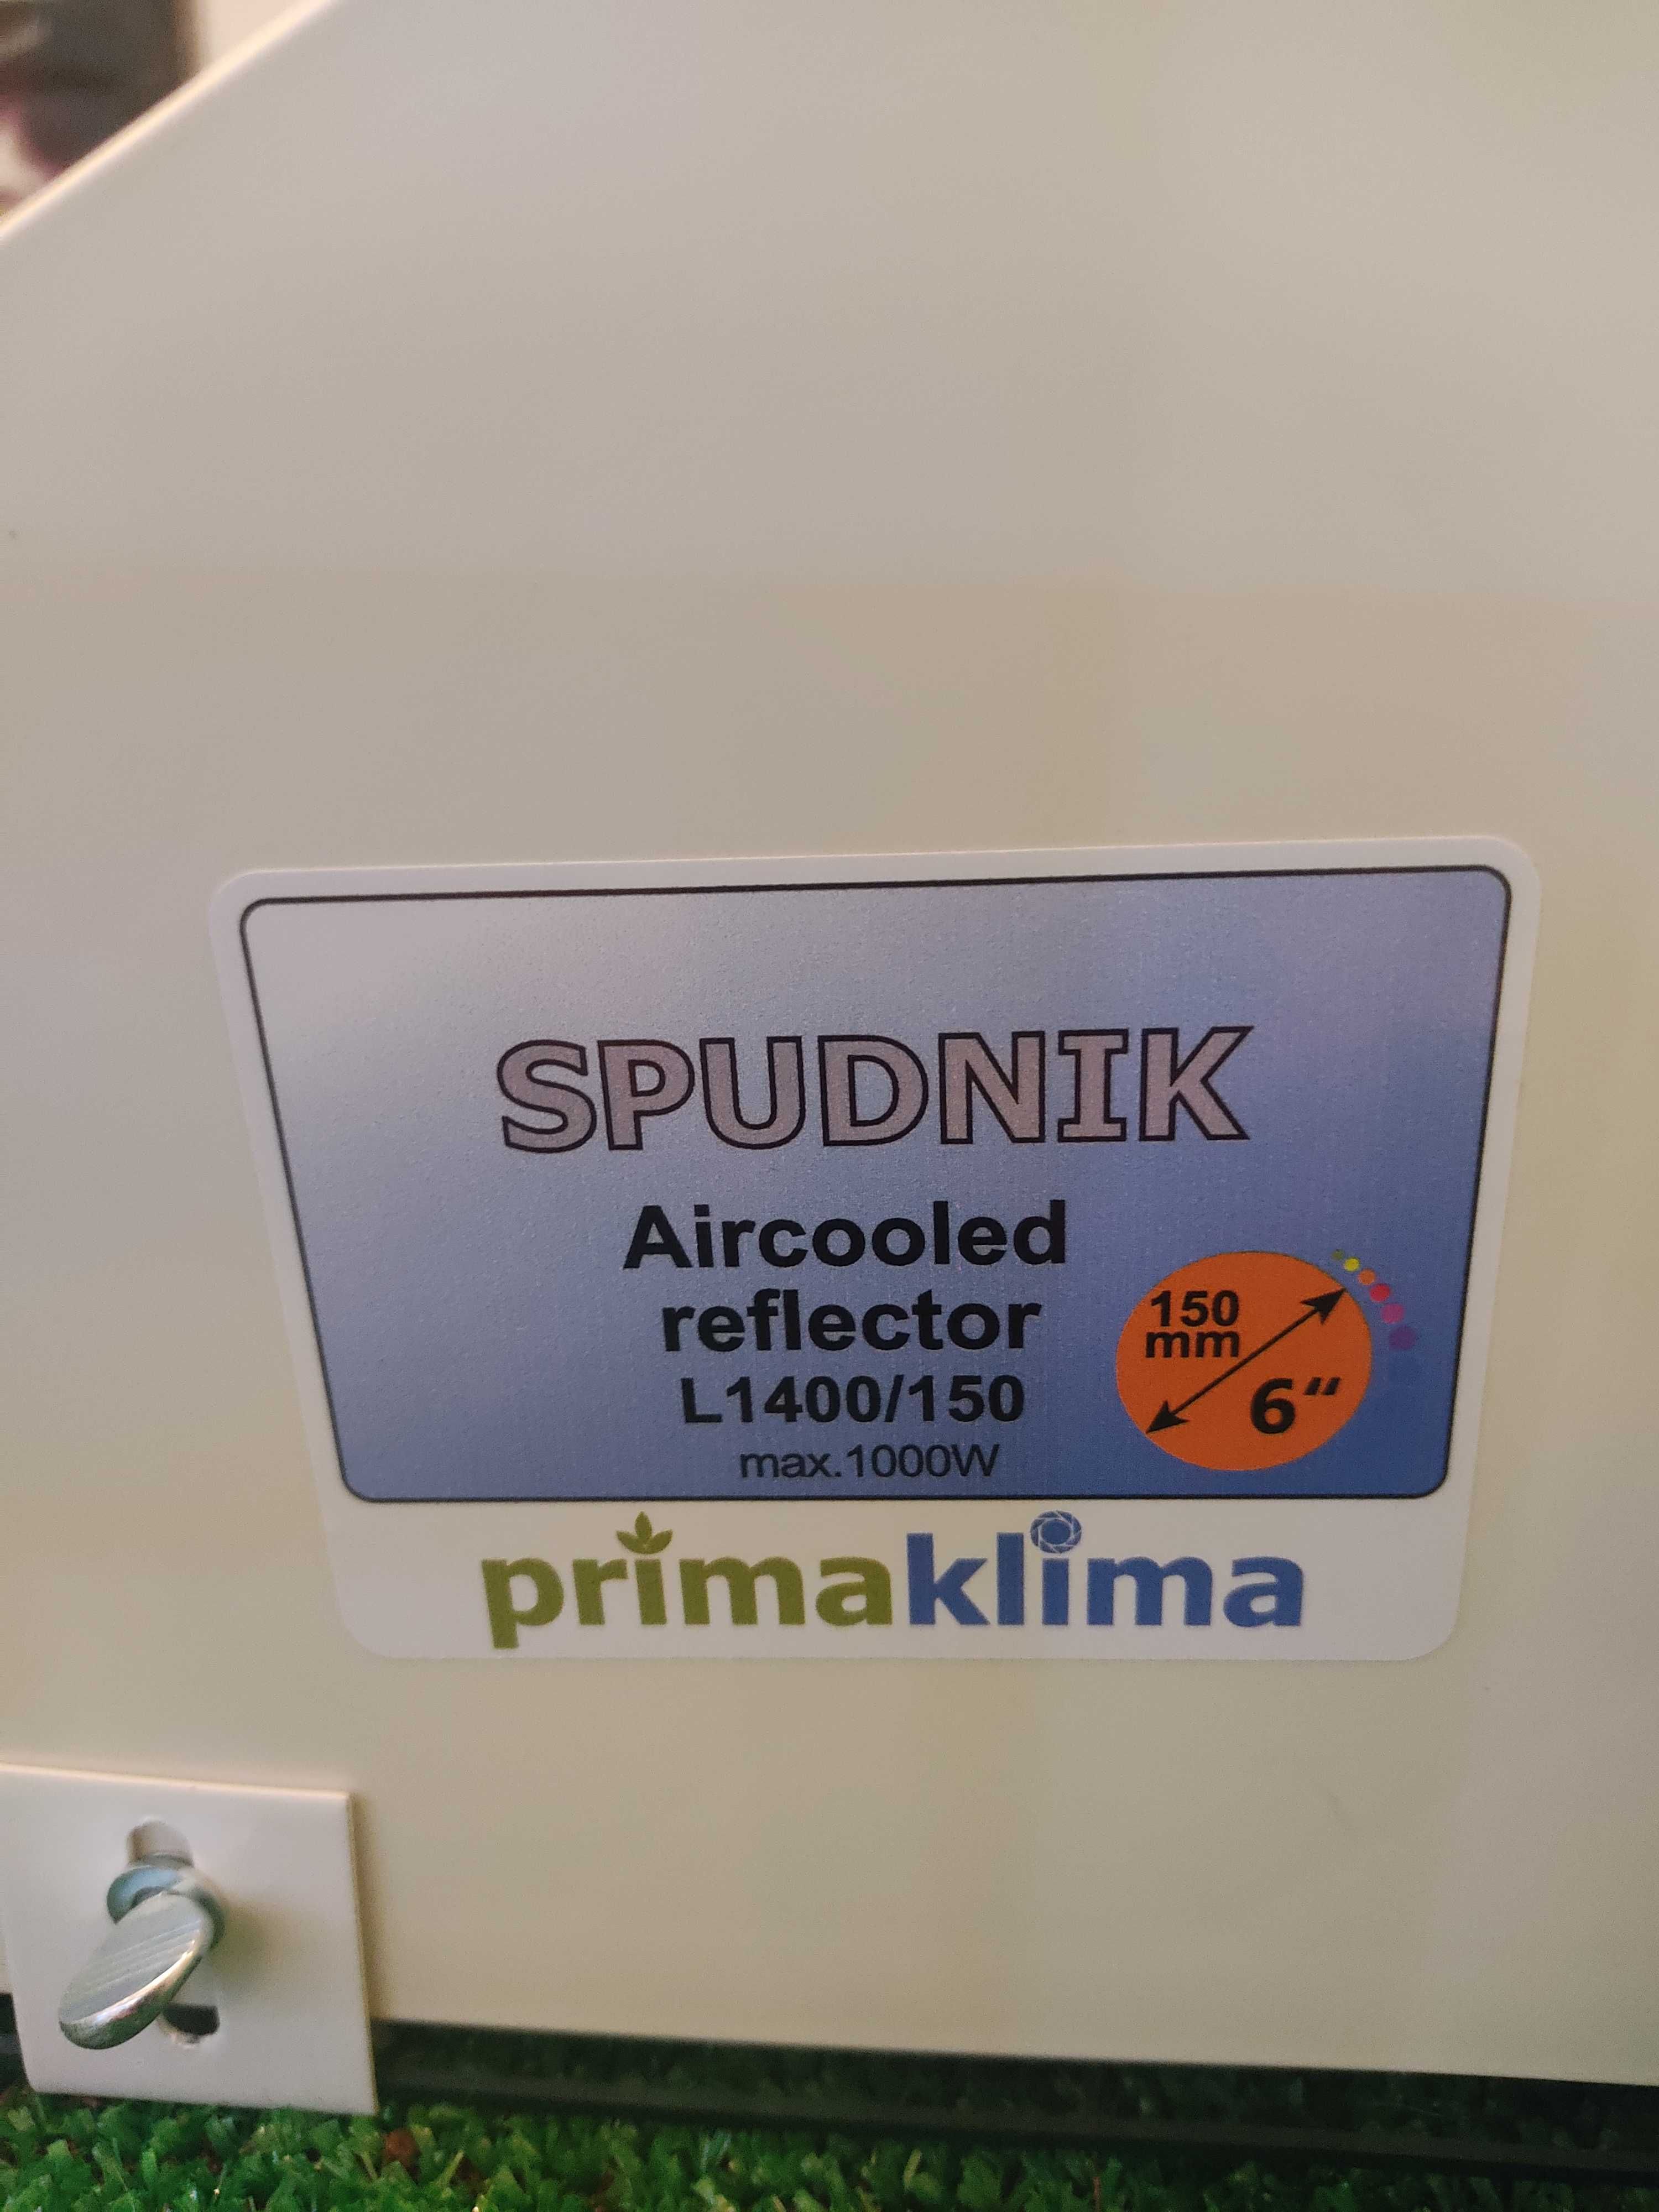 Refletor Aircooled Spudnik PrimaKlima (L1400/150)